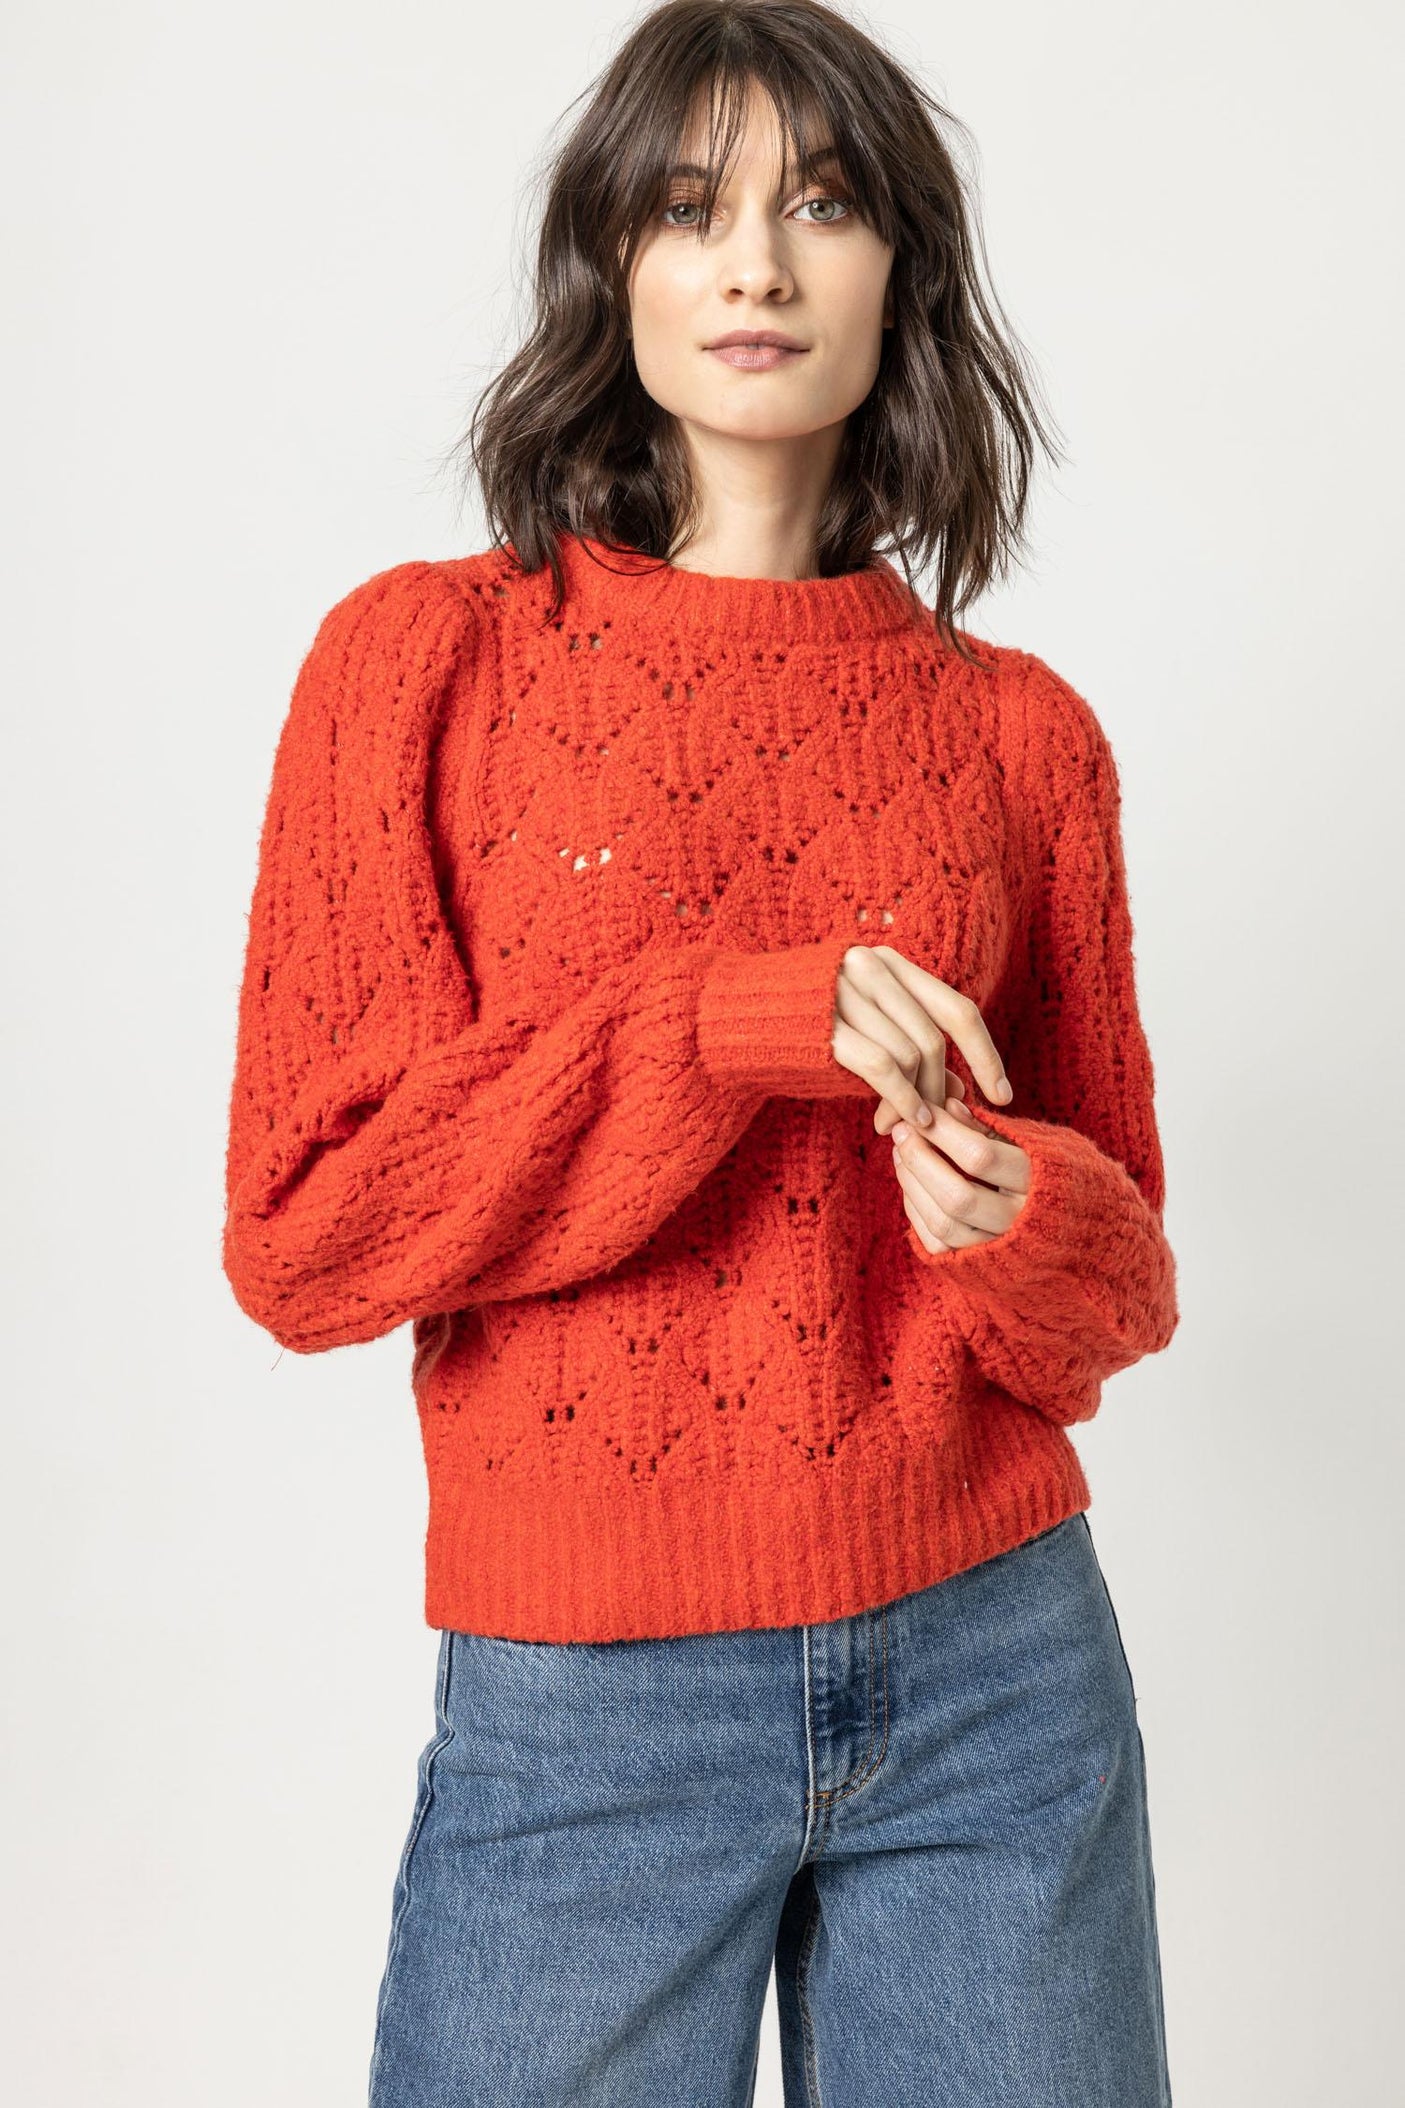 Top Stitch Red Embroidered Angle Crewneck Sweatshirt Women's XL